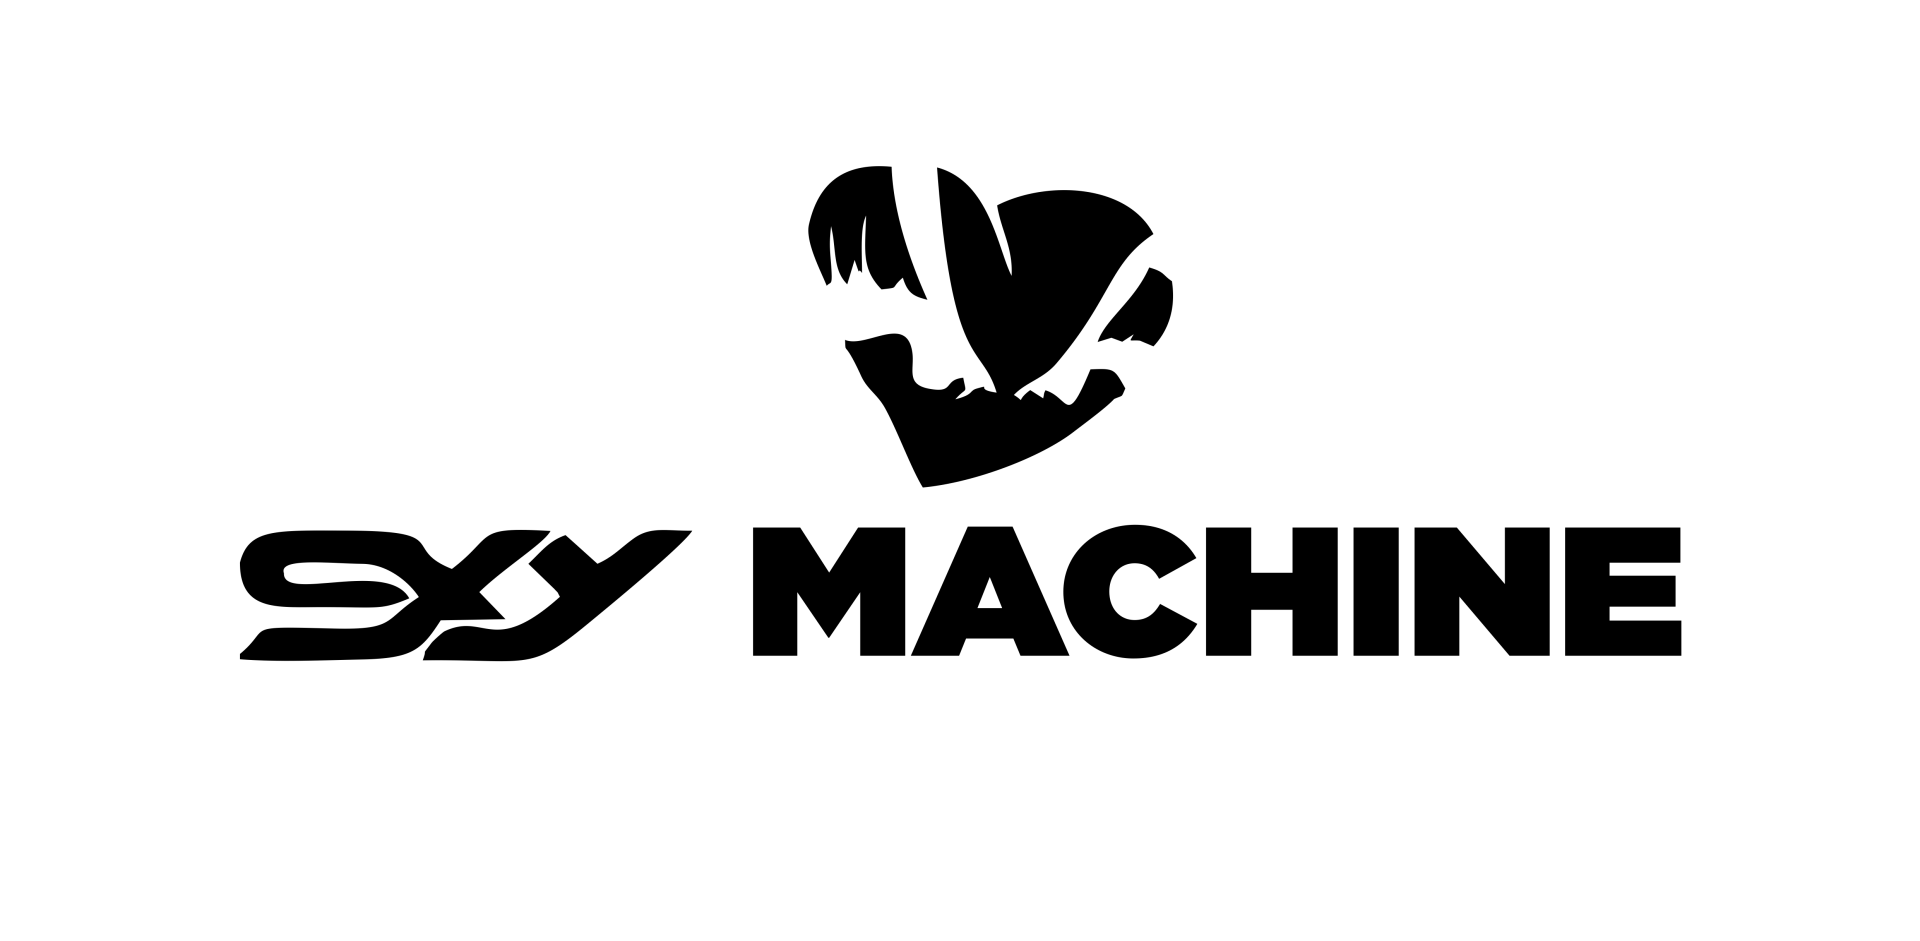 SXY Machine  : Brand Short Description Type Here.